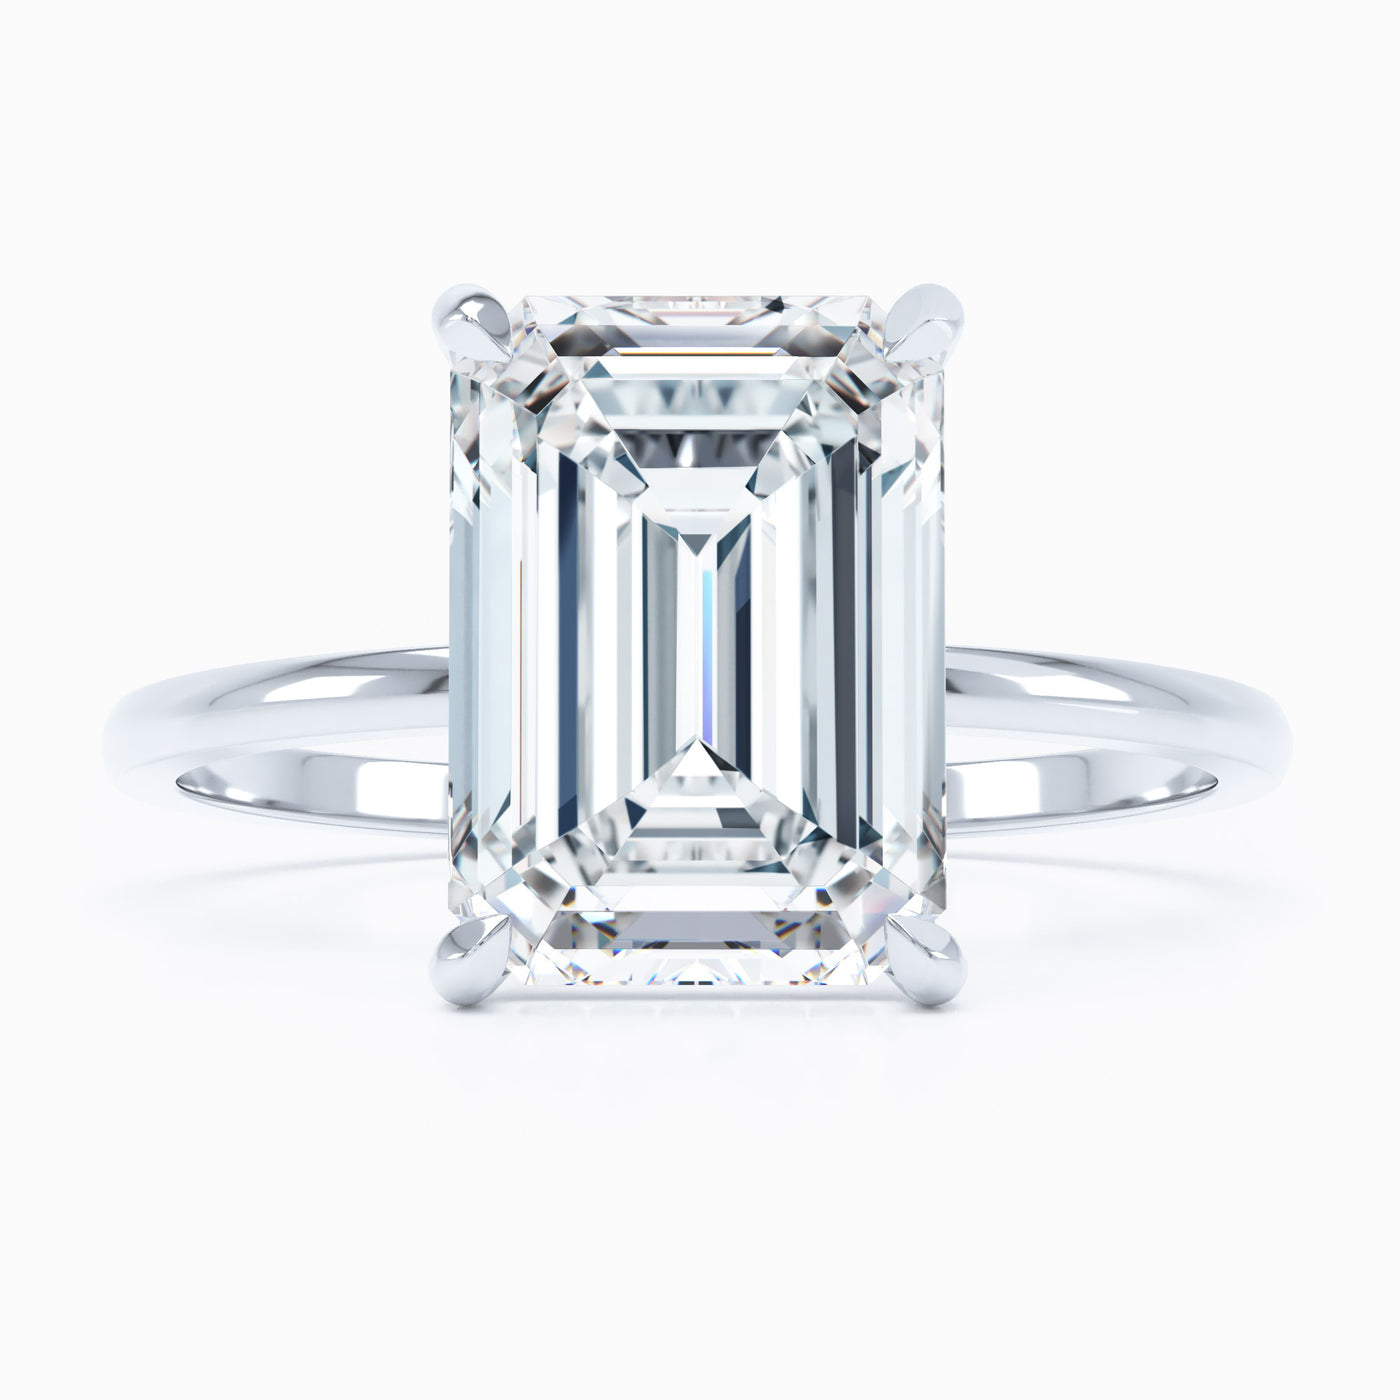 Petite Solitaire Emerald Cut Engagement Ring